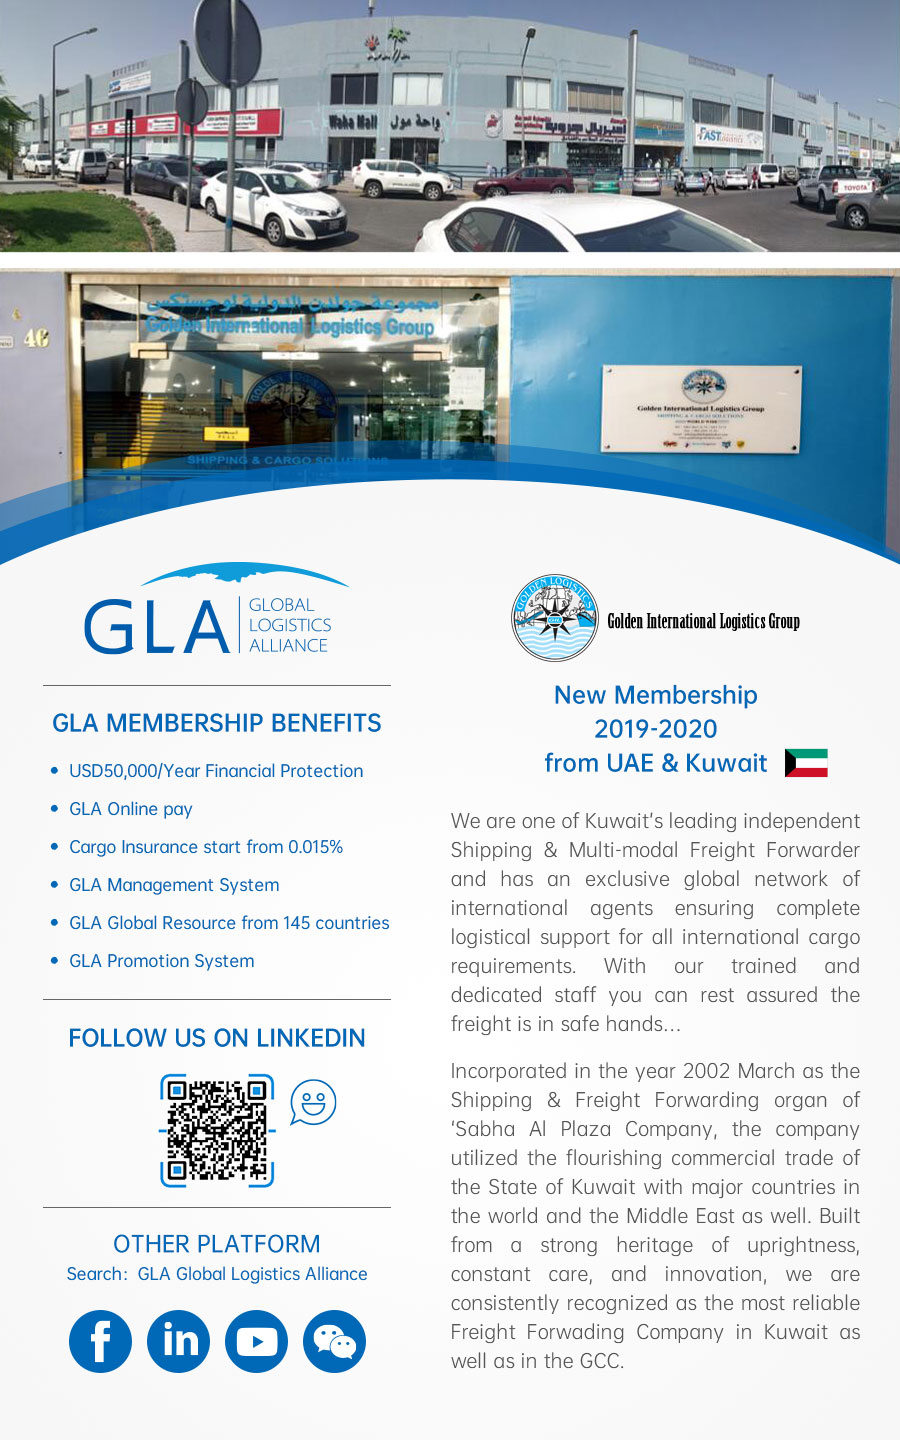 GLA New Membership — Golden International Logistics Group from UAE & Kuwait